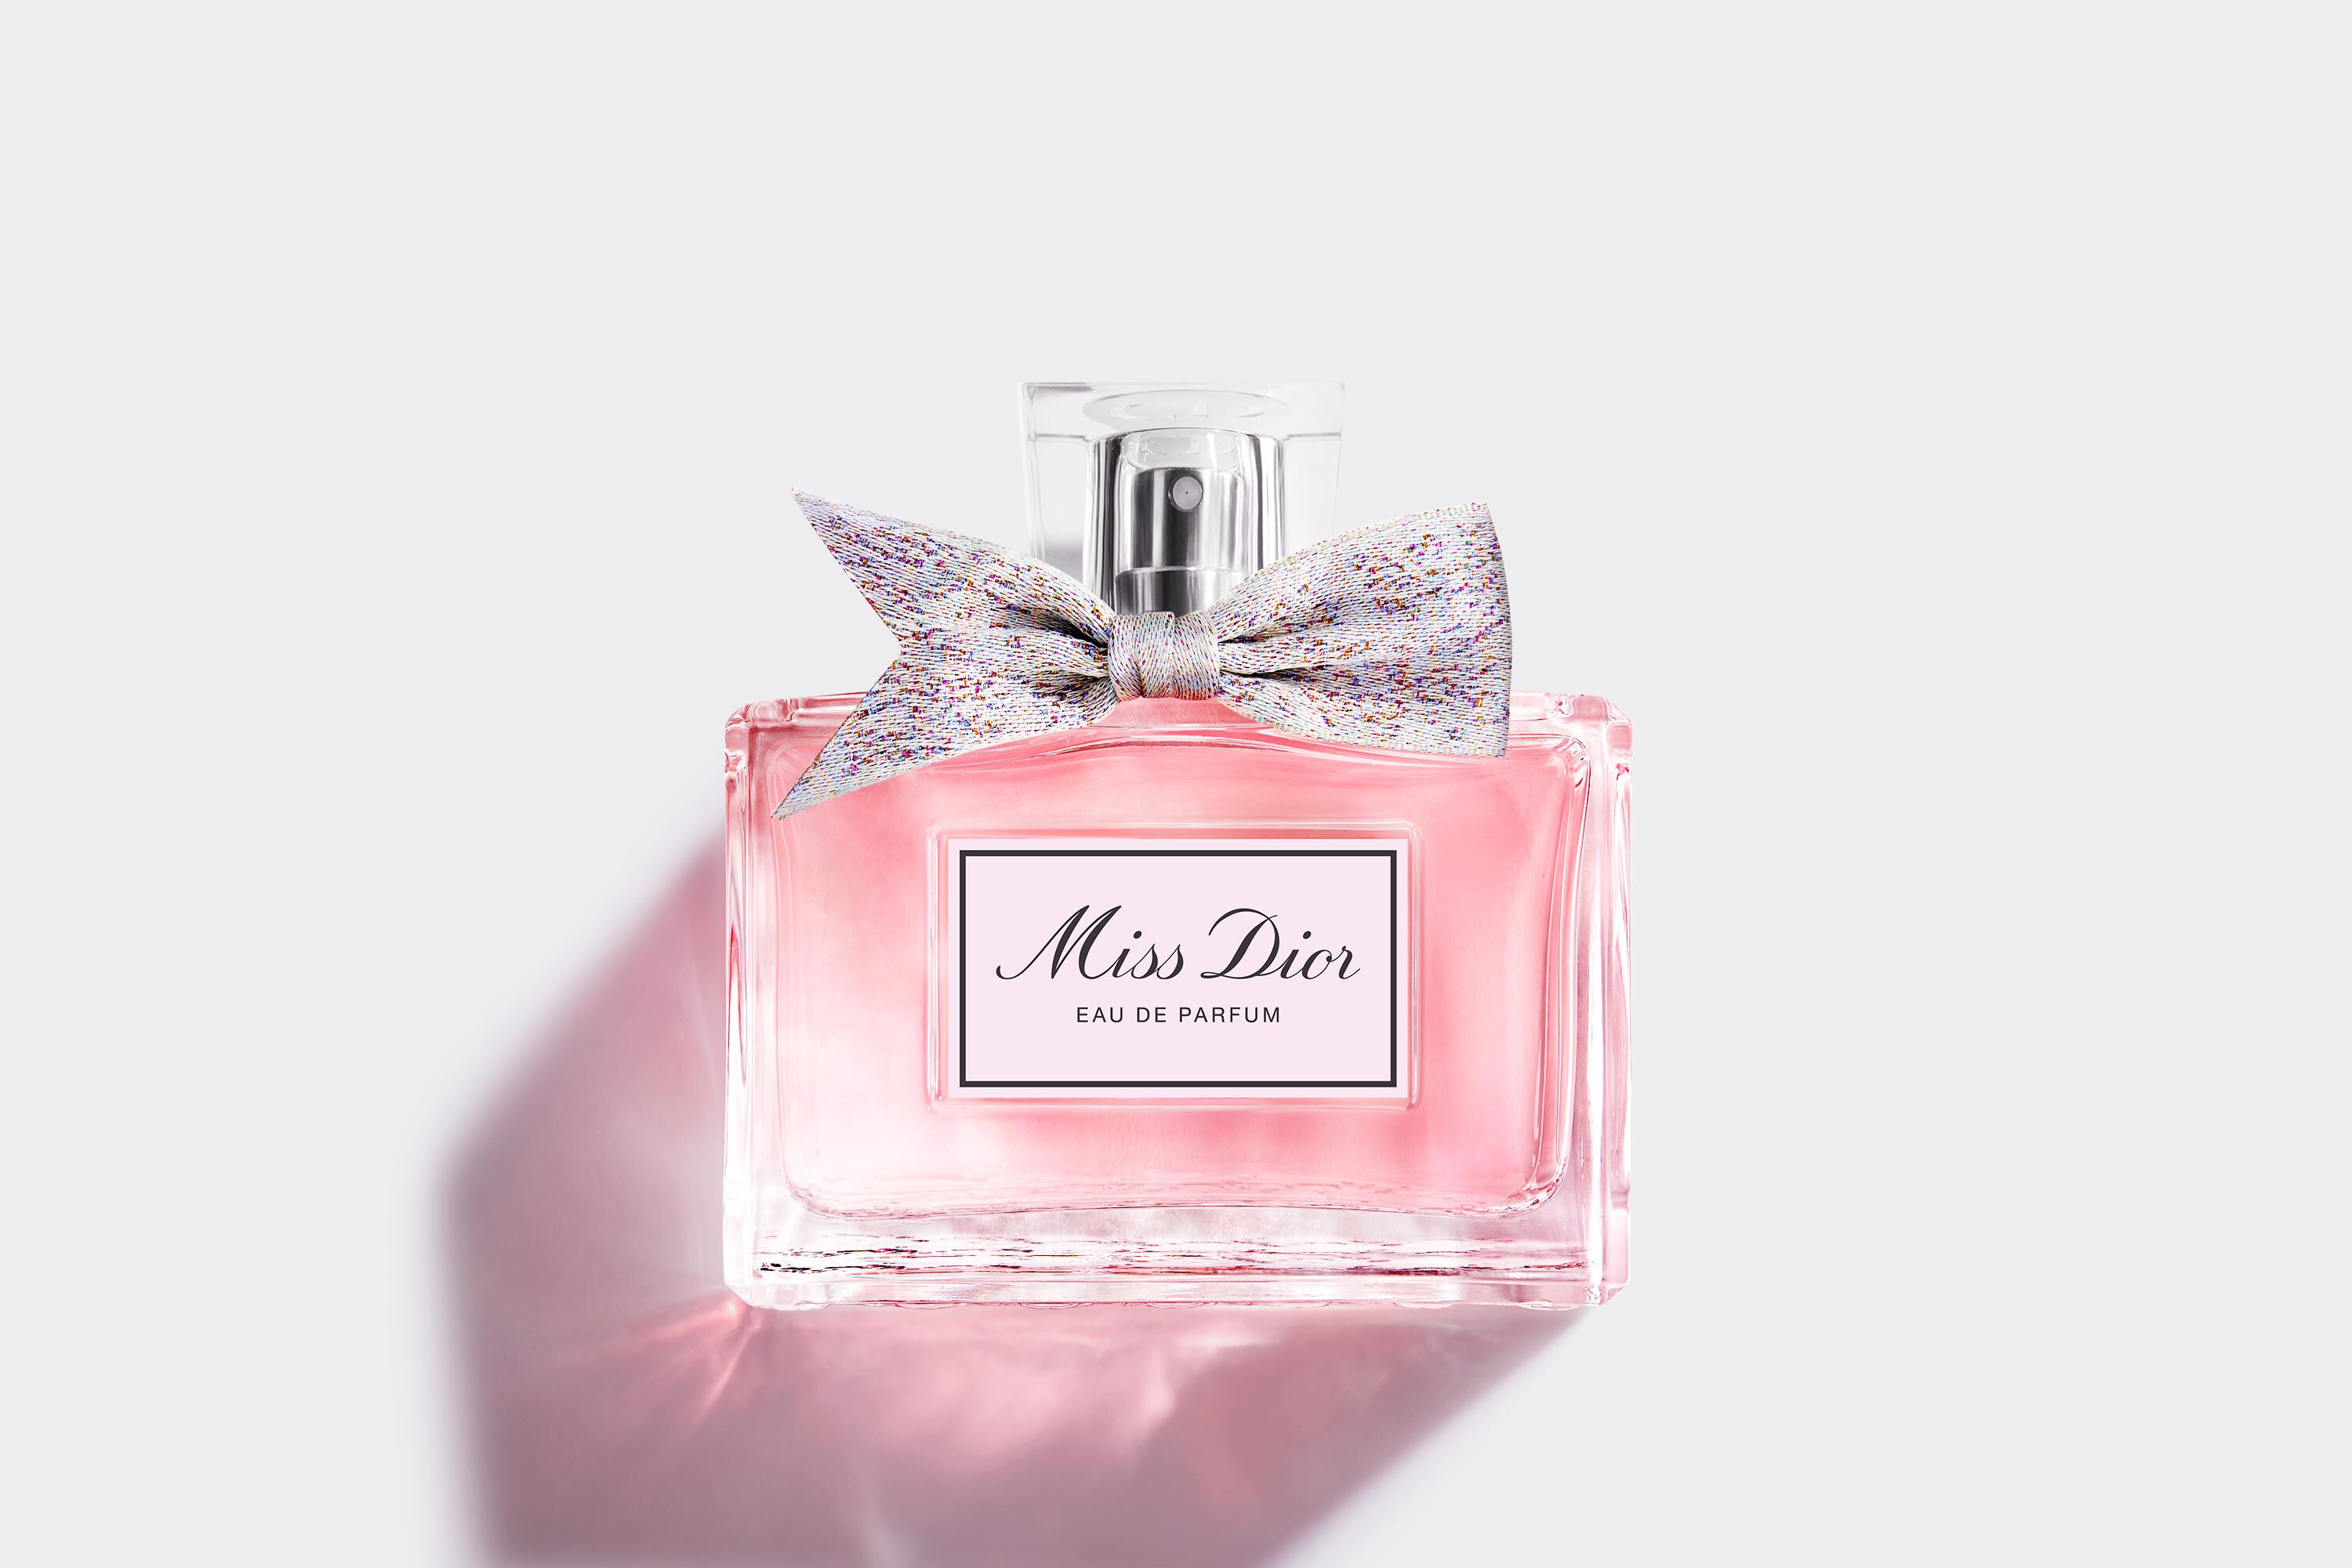 Dior: the New Dior Eau de Parfum with a Couture Bow |